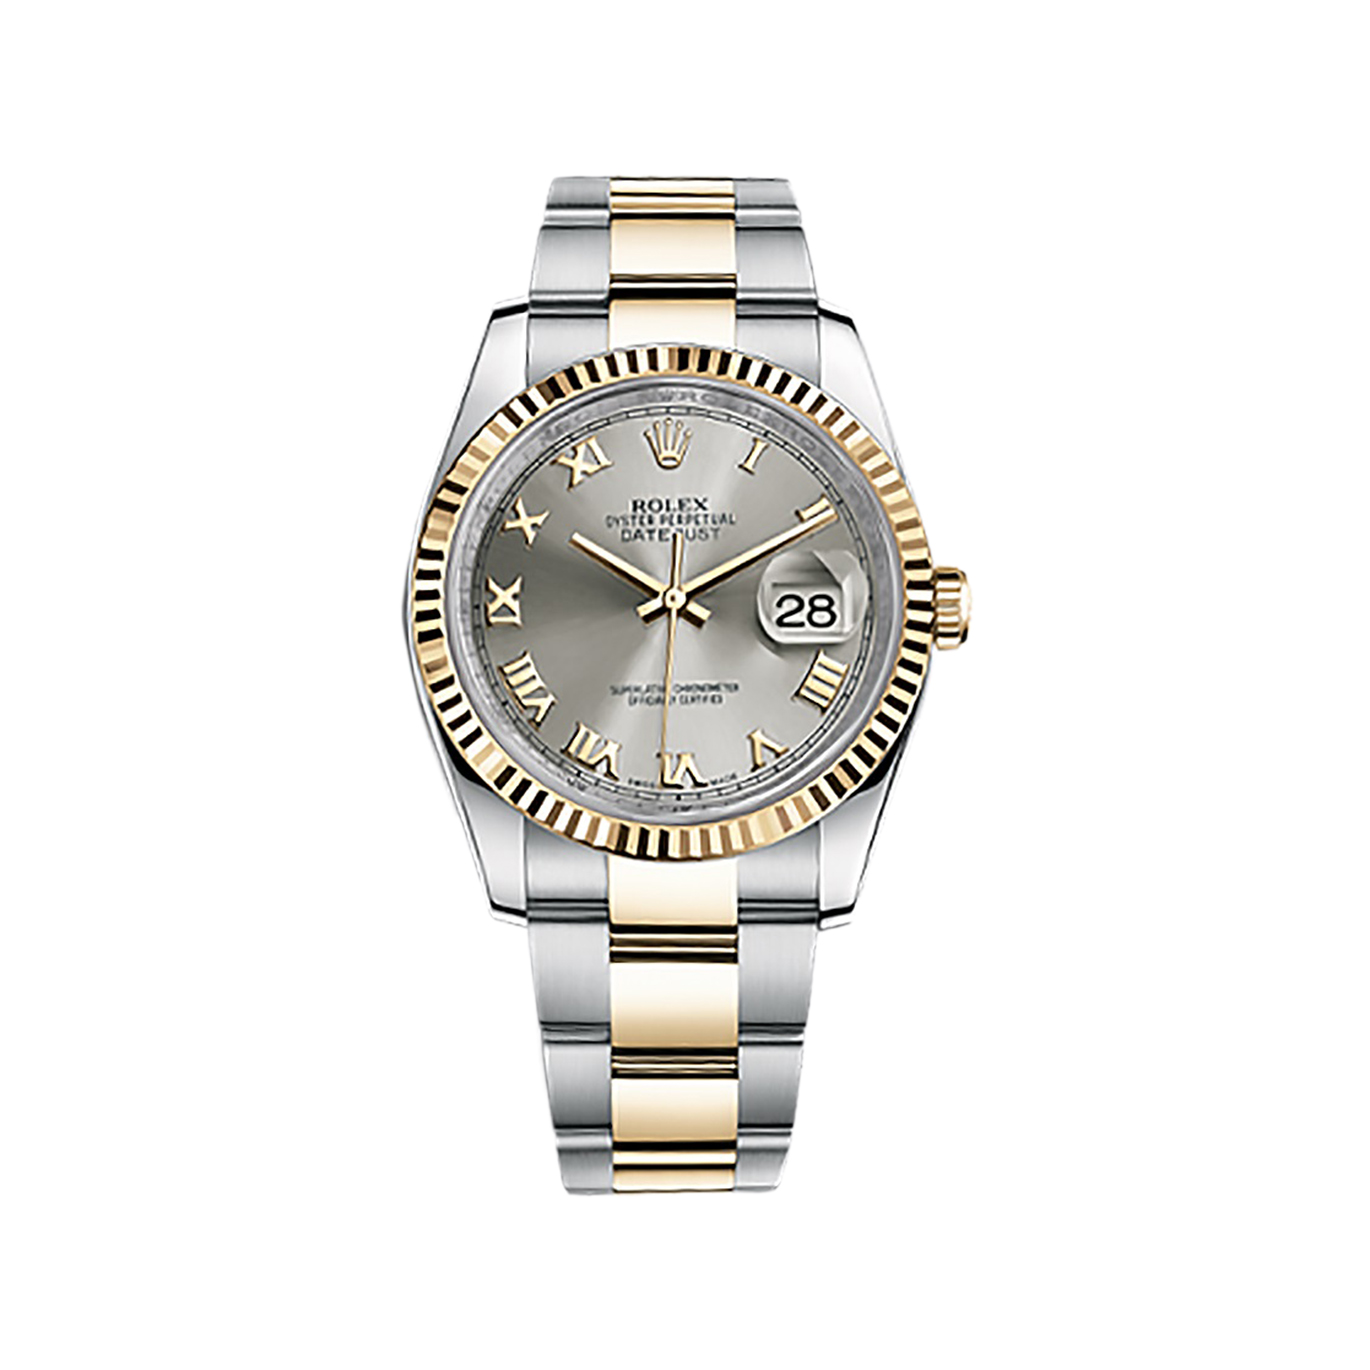 Datejust 36 116233 Gold & Stainless Steel Watch (Steel)